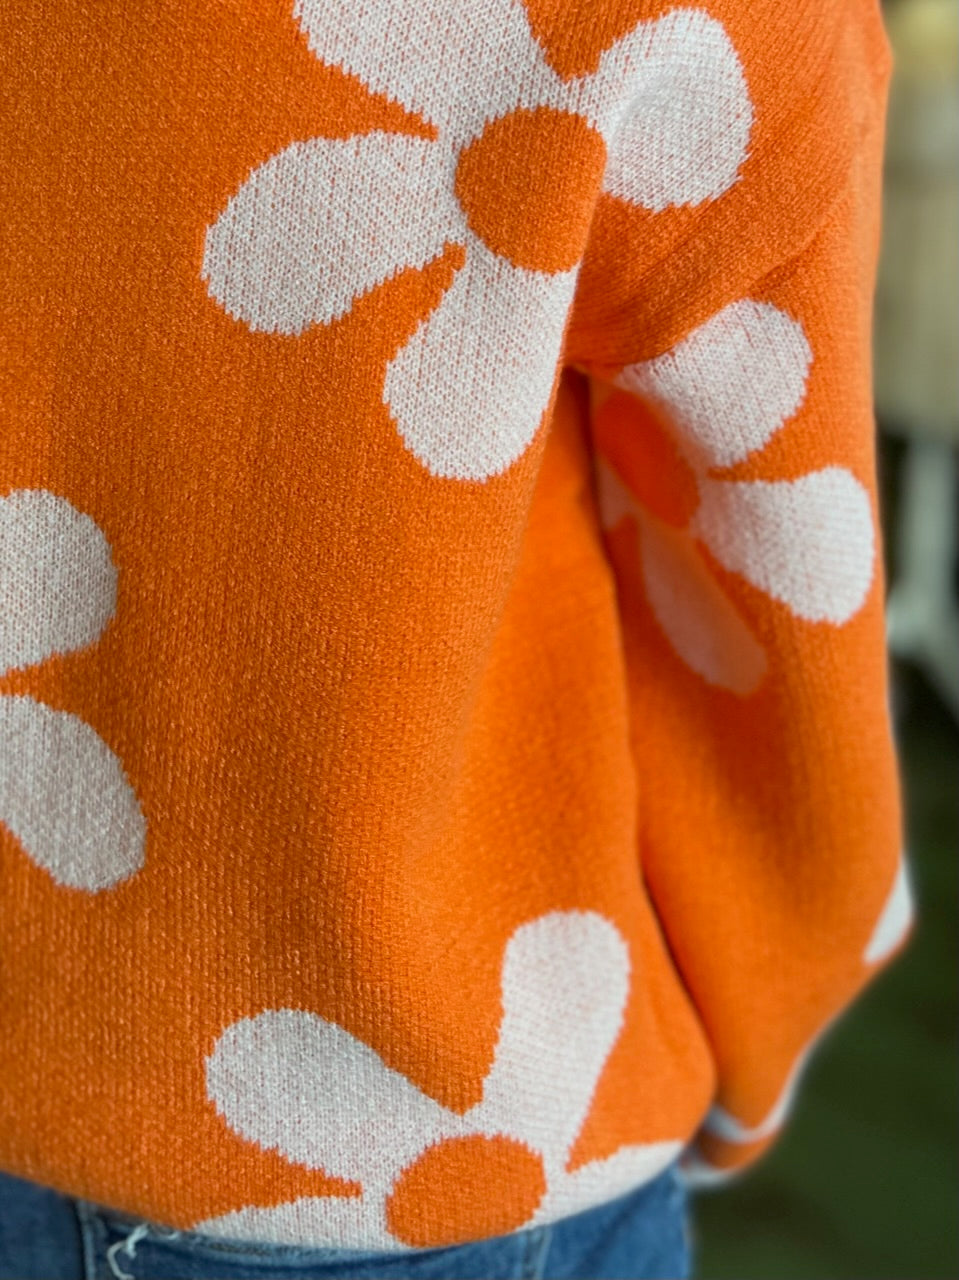 orange floral sweater